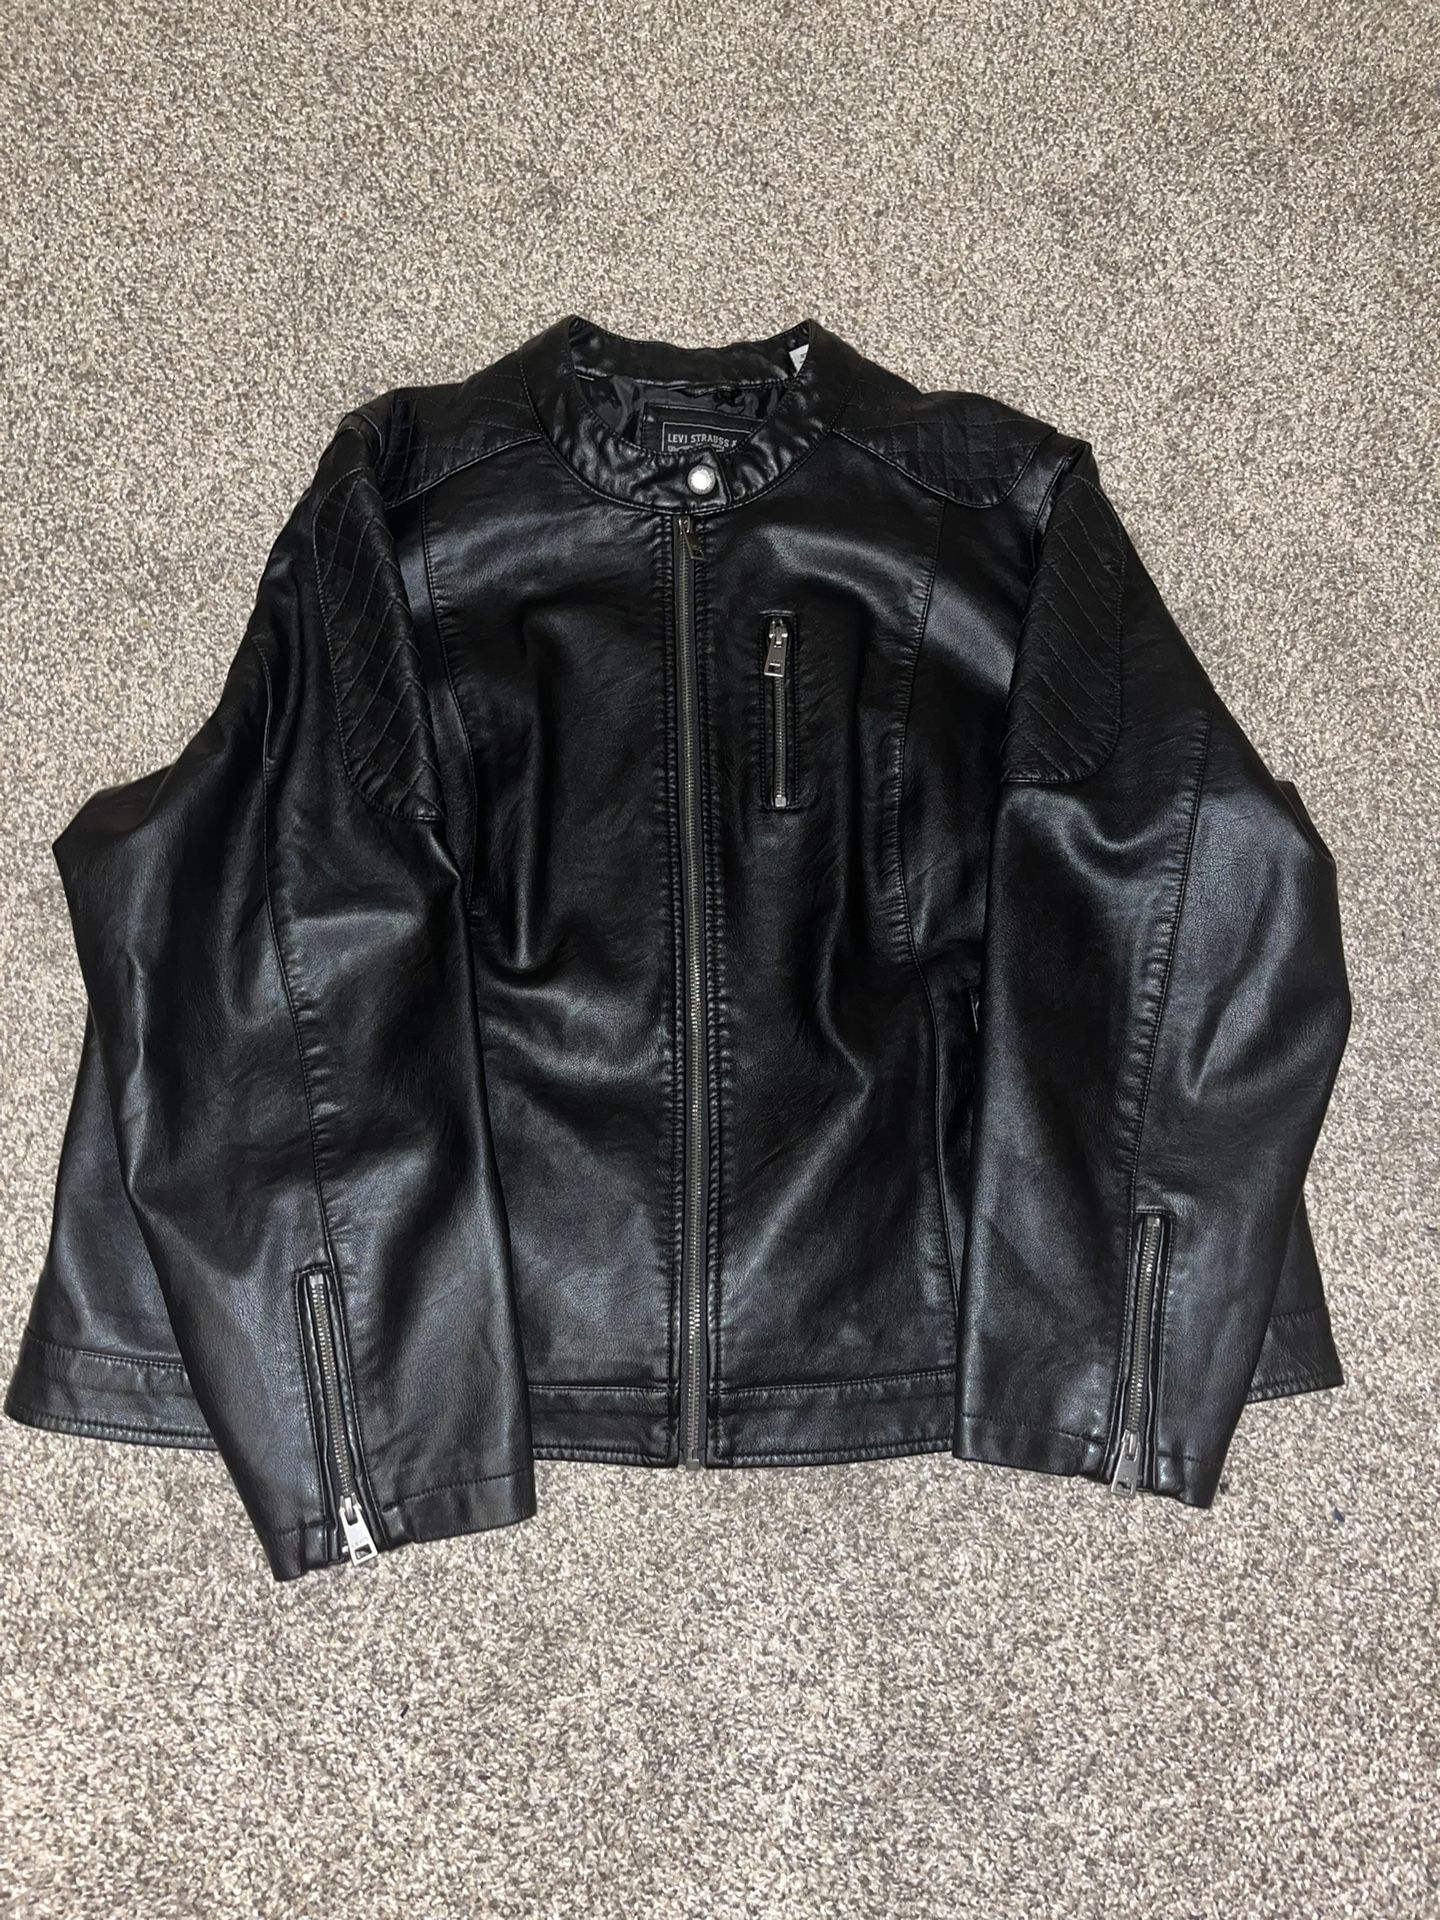 Woman’s Levi’s Leather Jacket